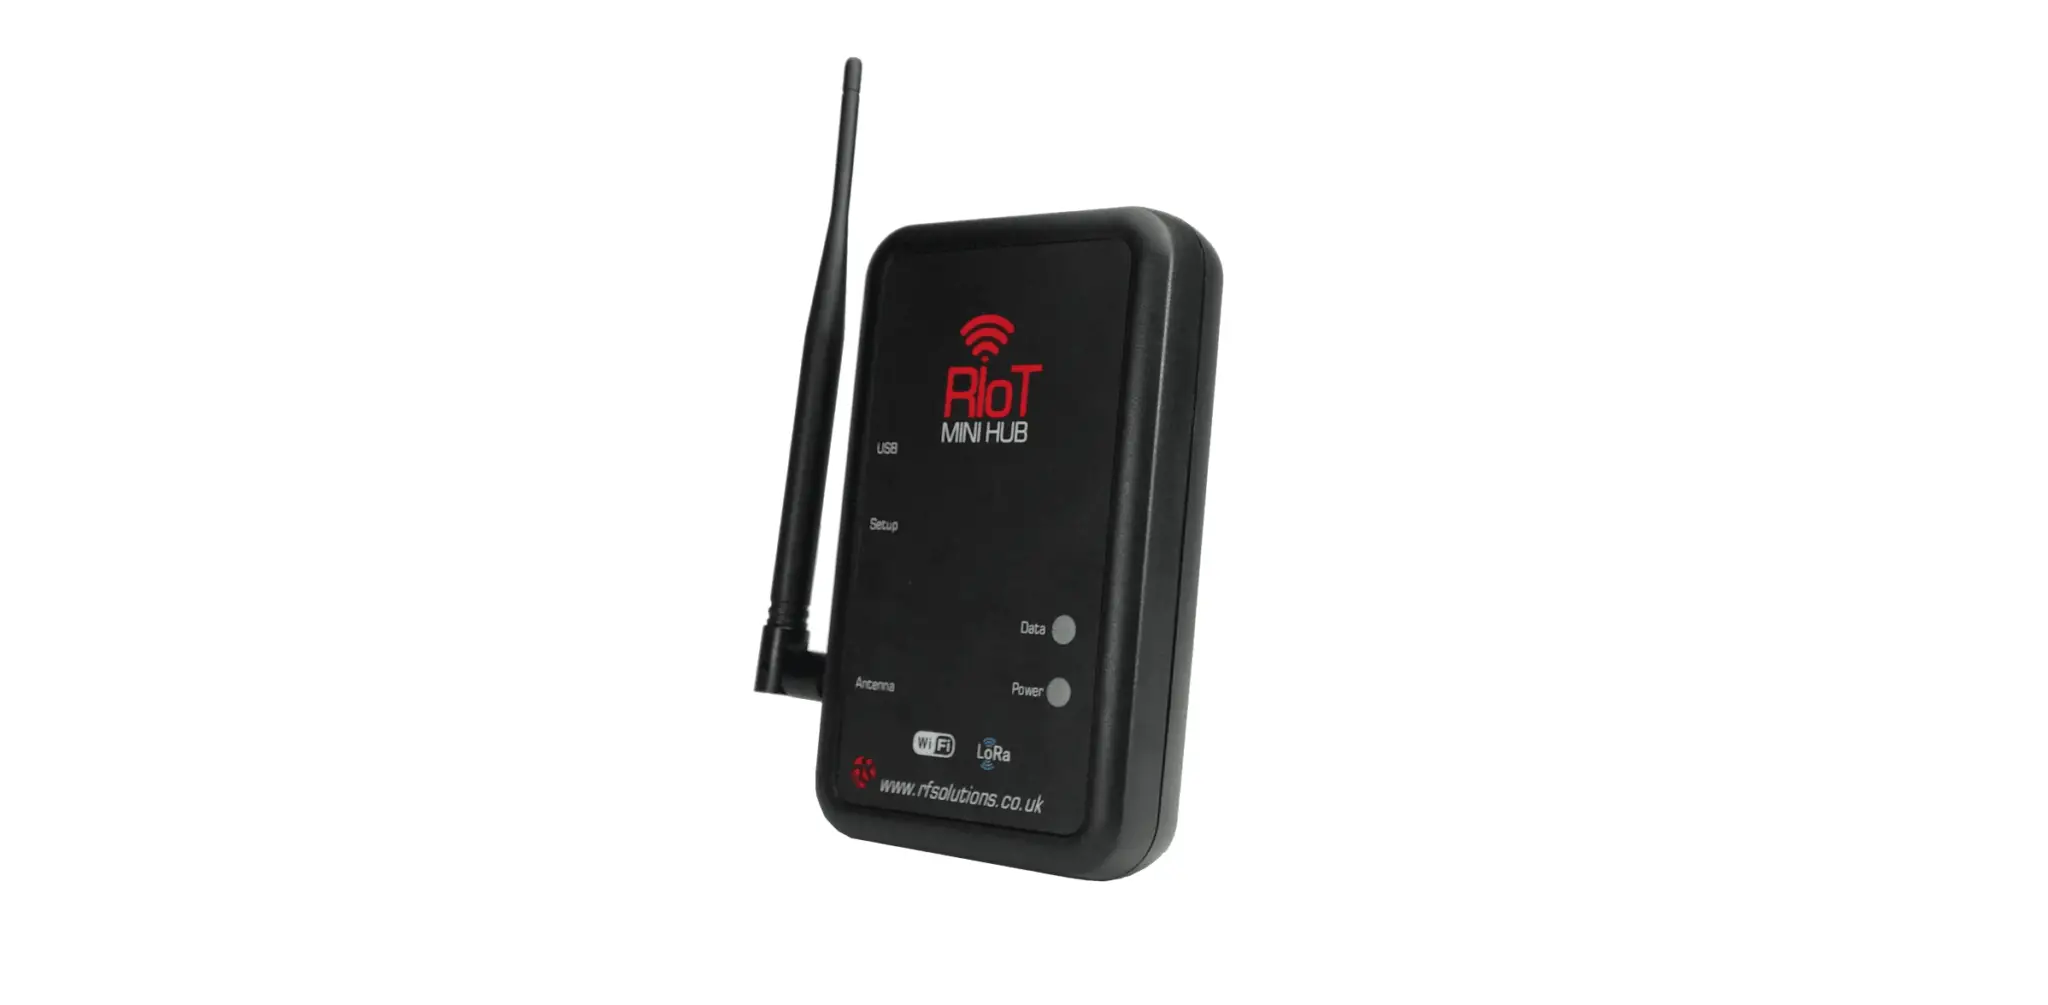 RIoT-MINIHUB RF Receiver and Monitor IoT Sensor Gateway